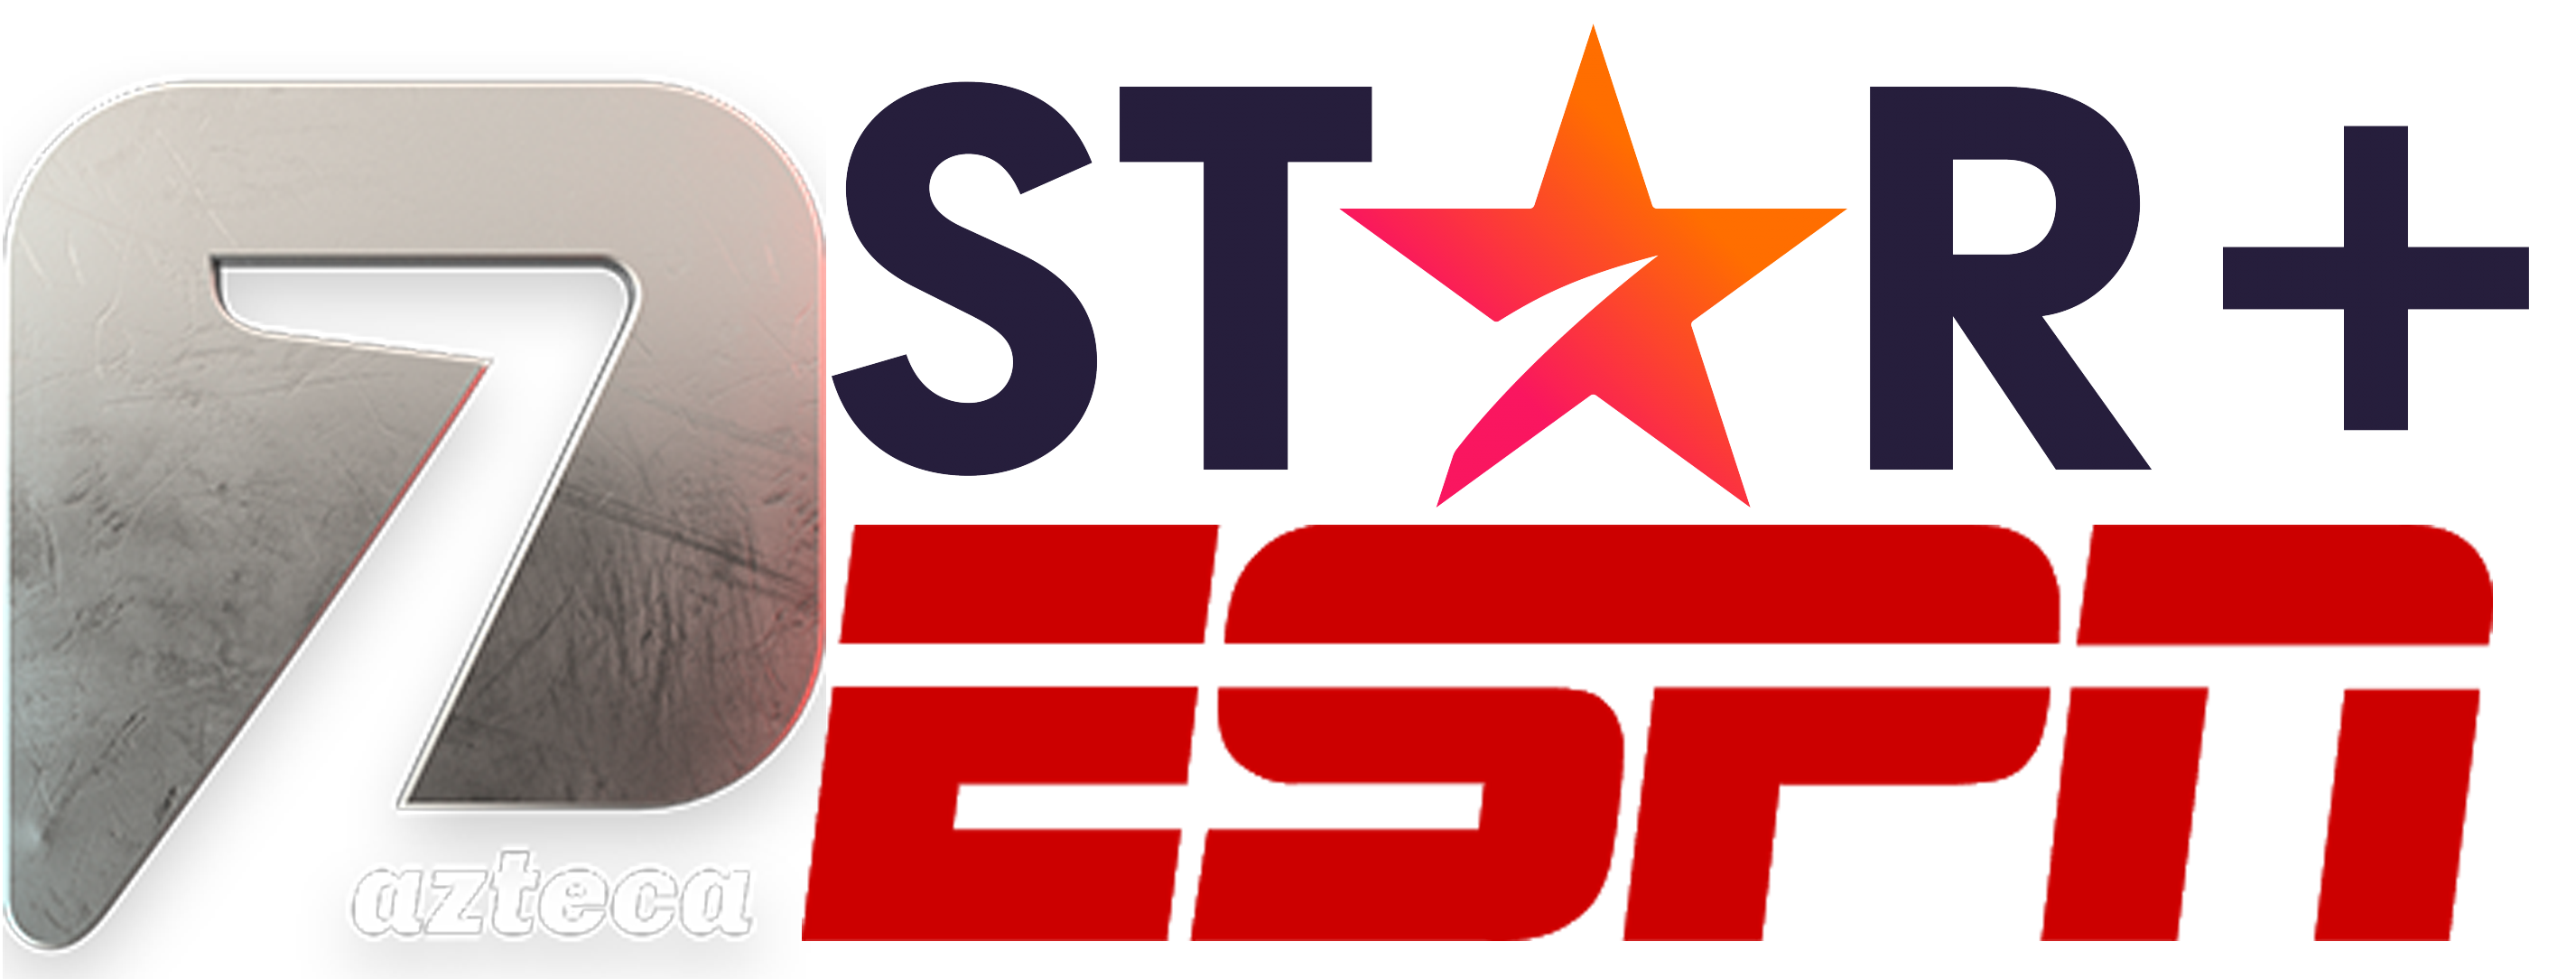 Azteca 7 | STAR+ | ESPN